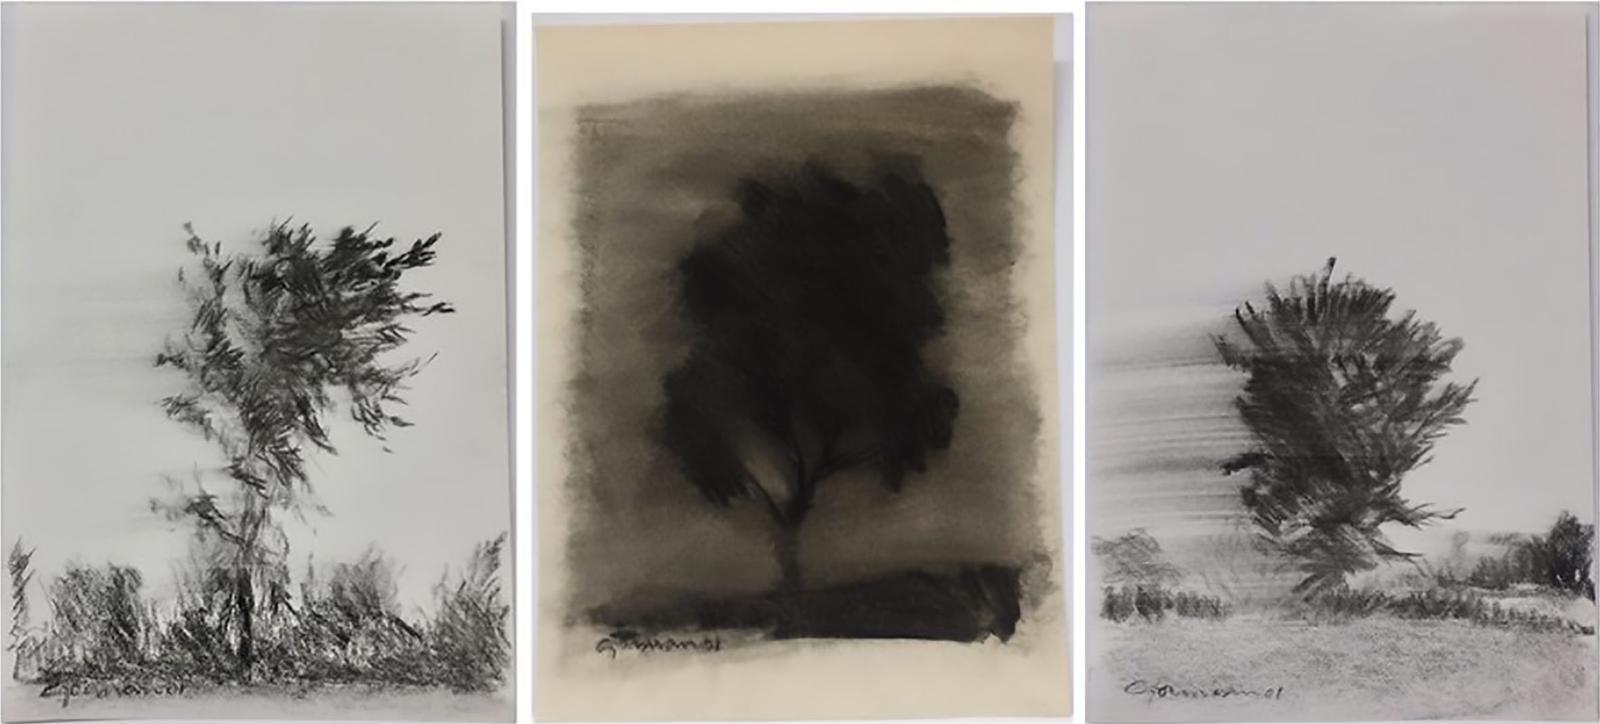 Richard Borthwick Gorman (1935-2010) - Untitled (Tree Studies - Day And Night)